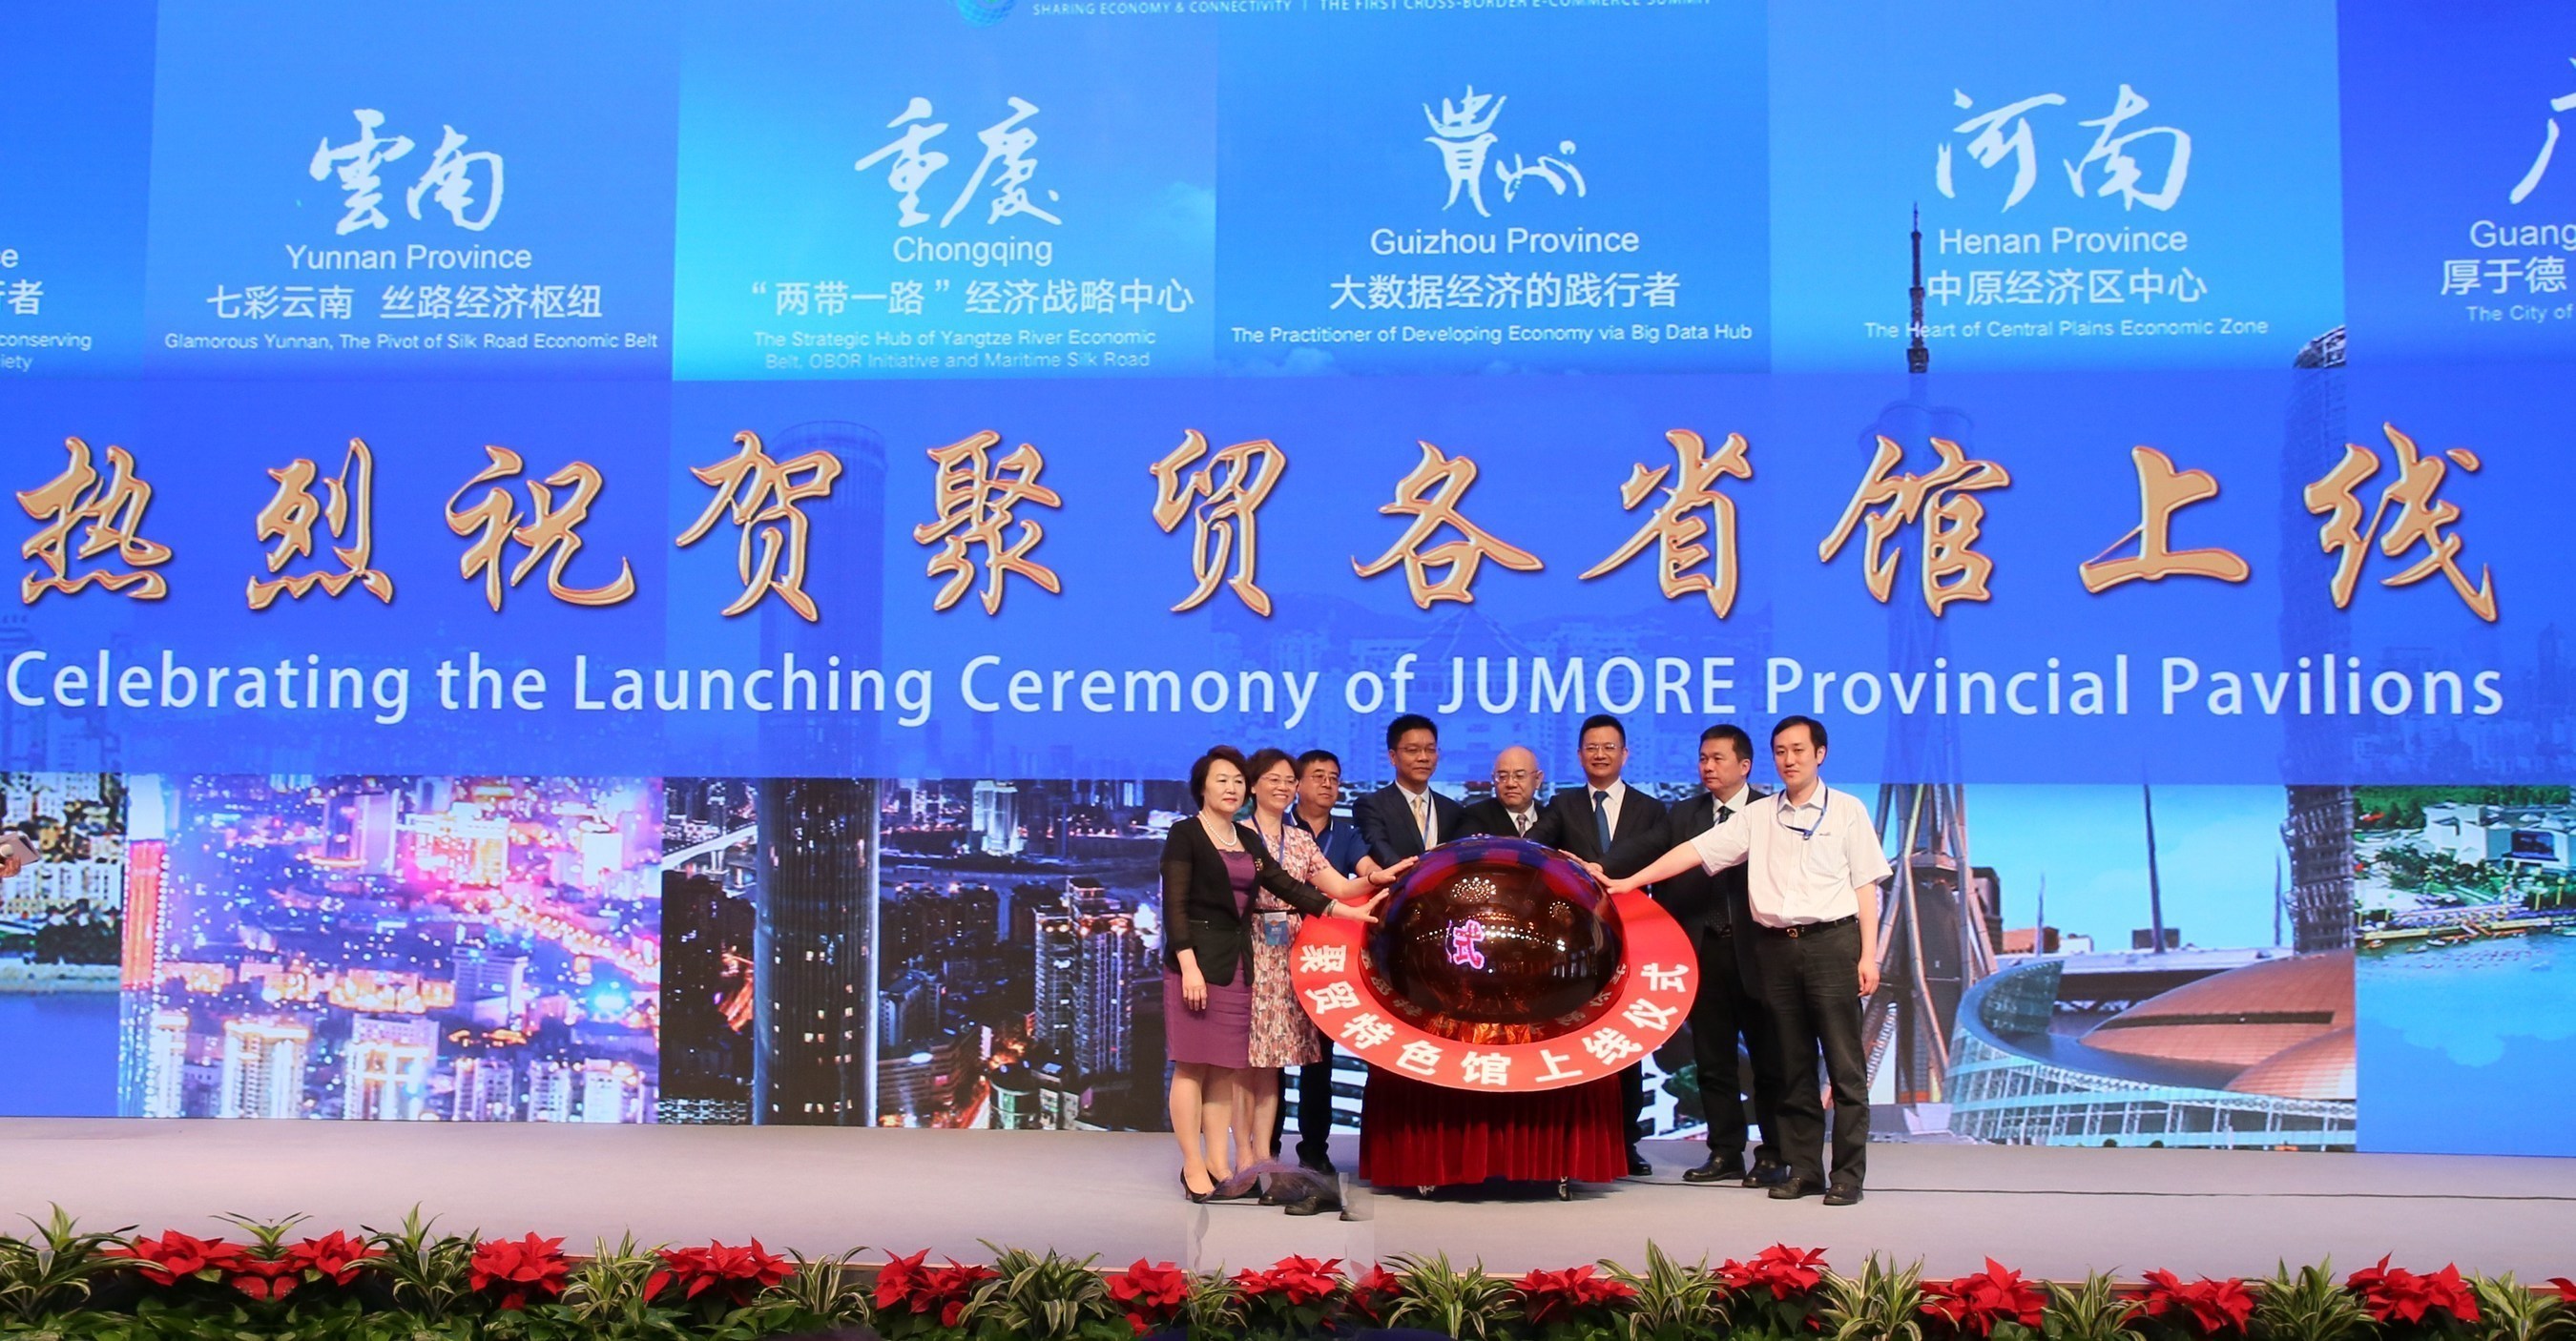 JUMORE Provincial Pavilion Launching Ceremony